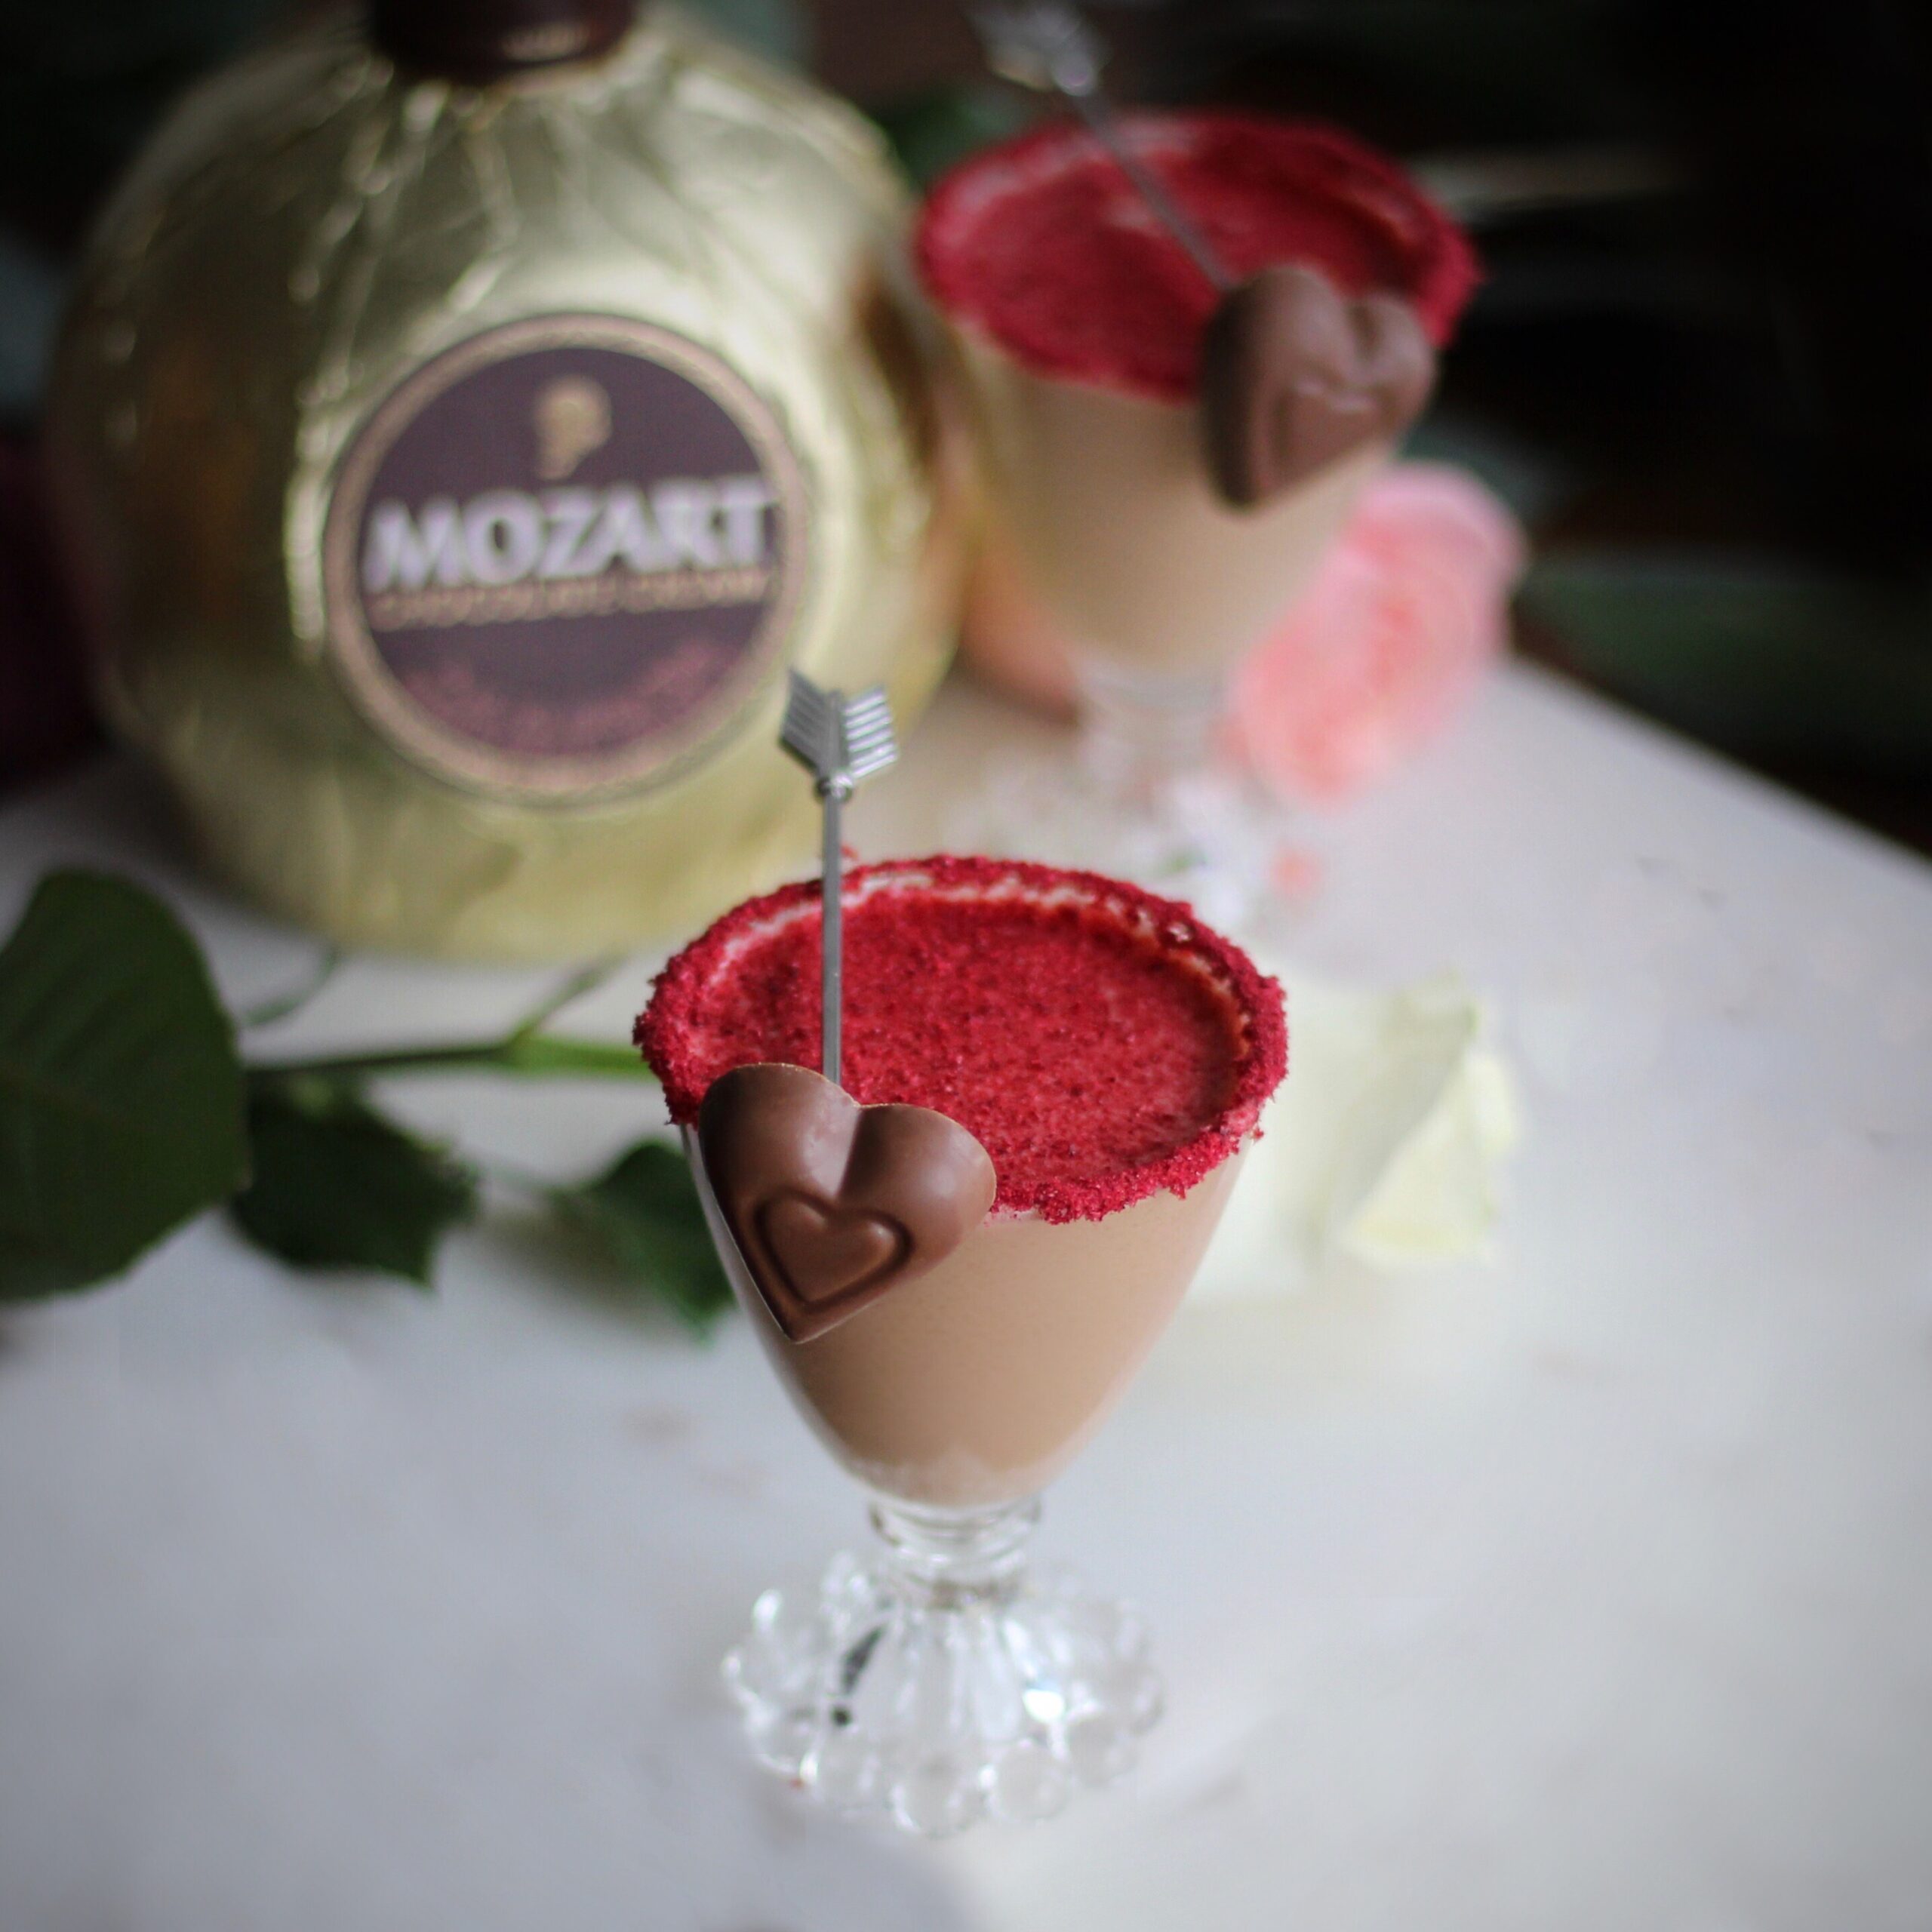 Mozart Chocolate Liqueur and SpiritedLA Valentine's Day Cocktail recipe